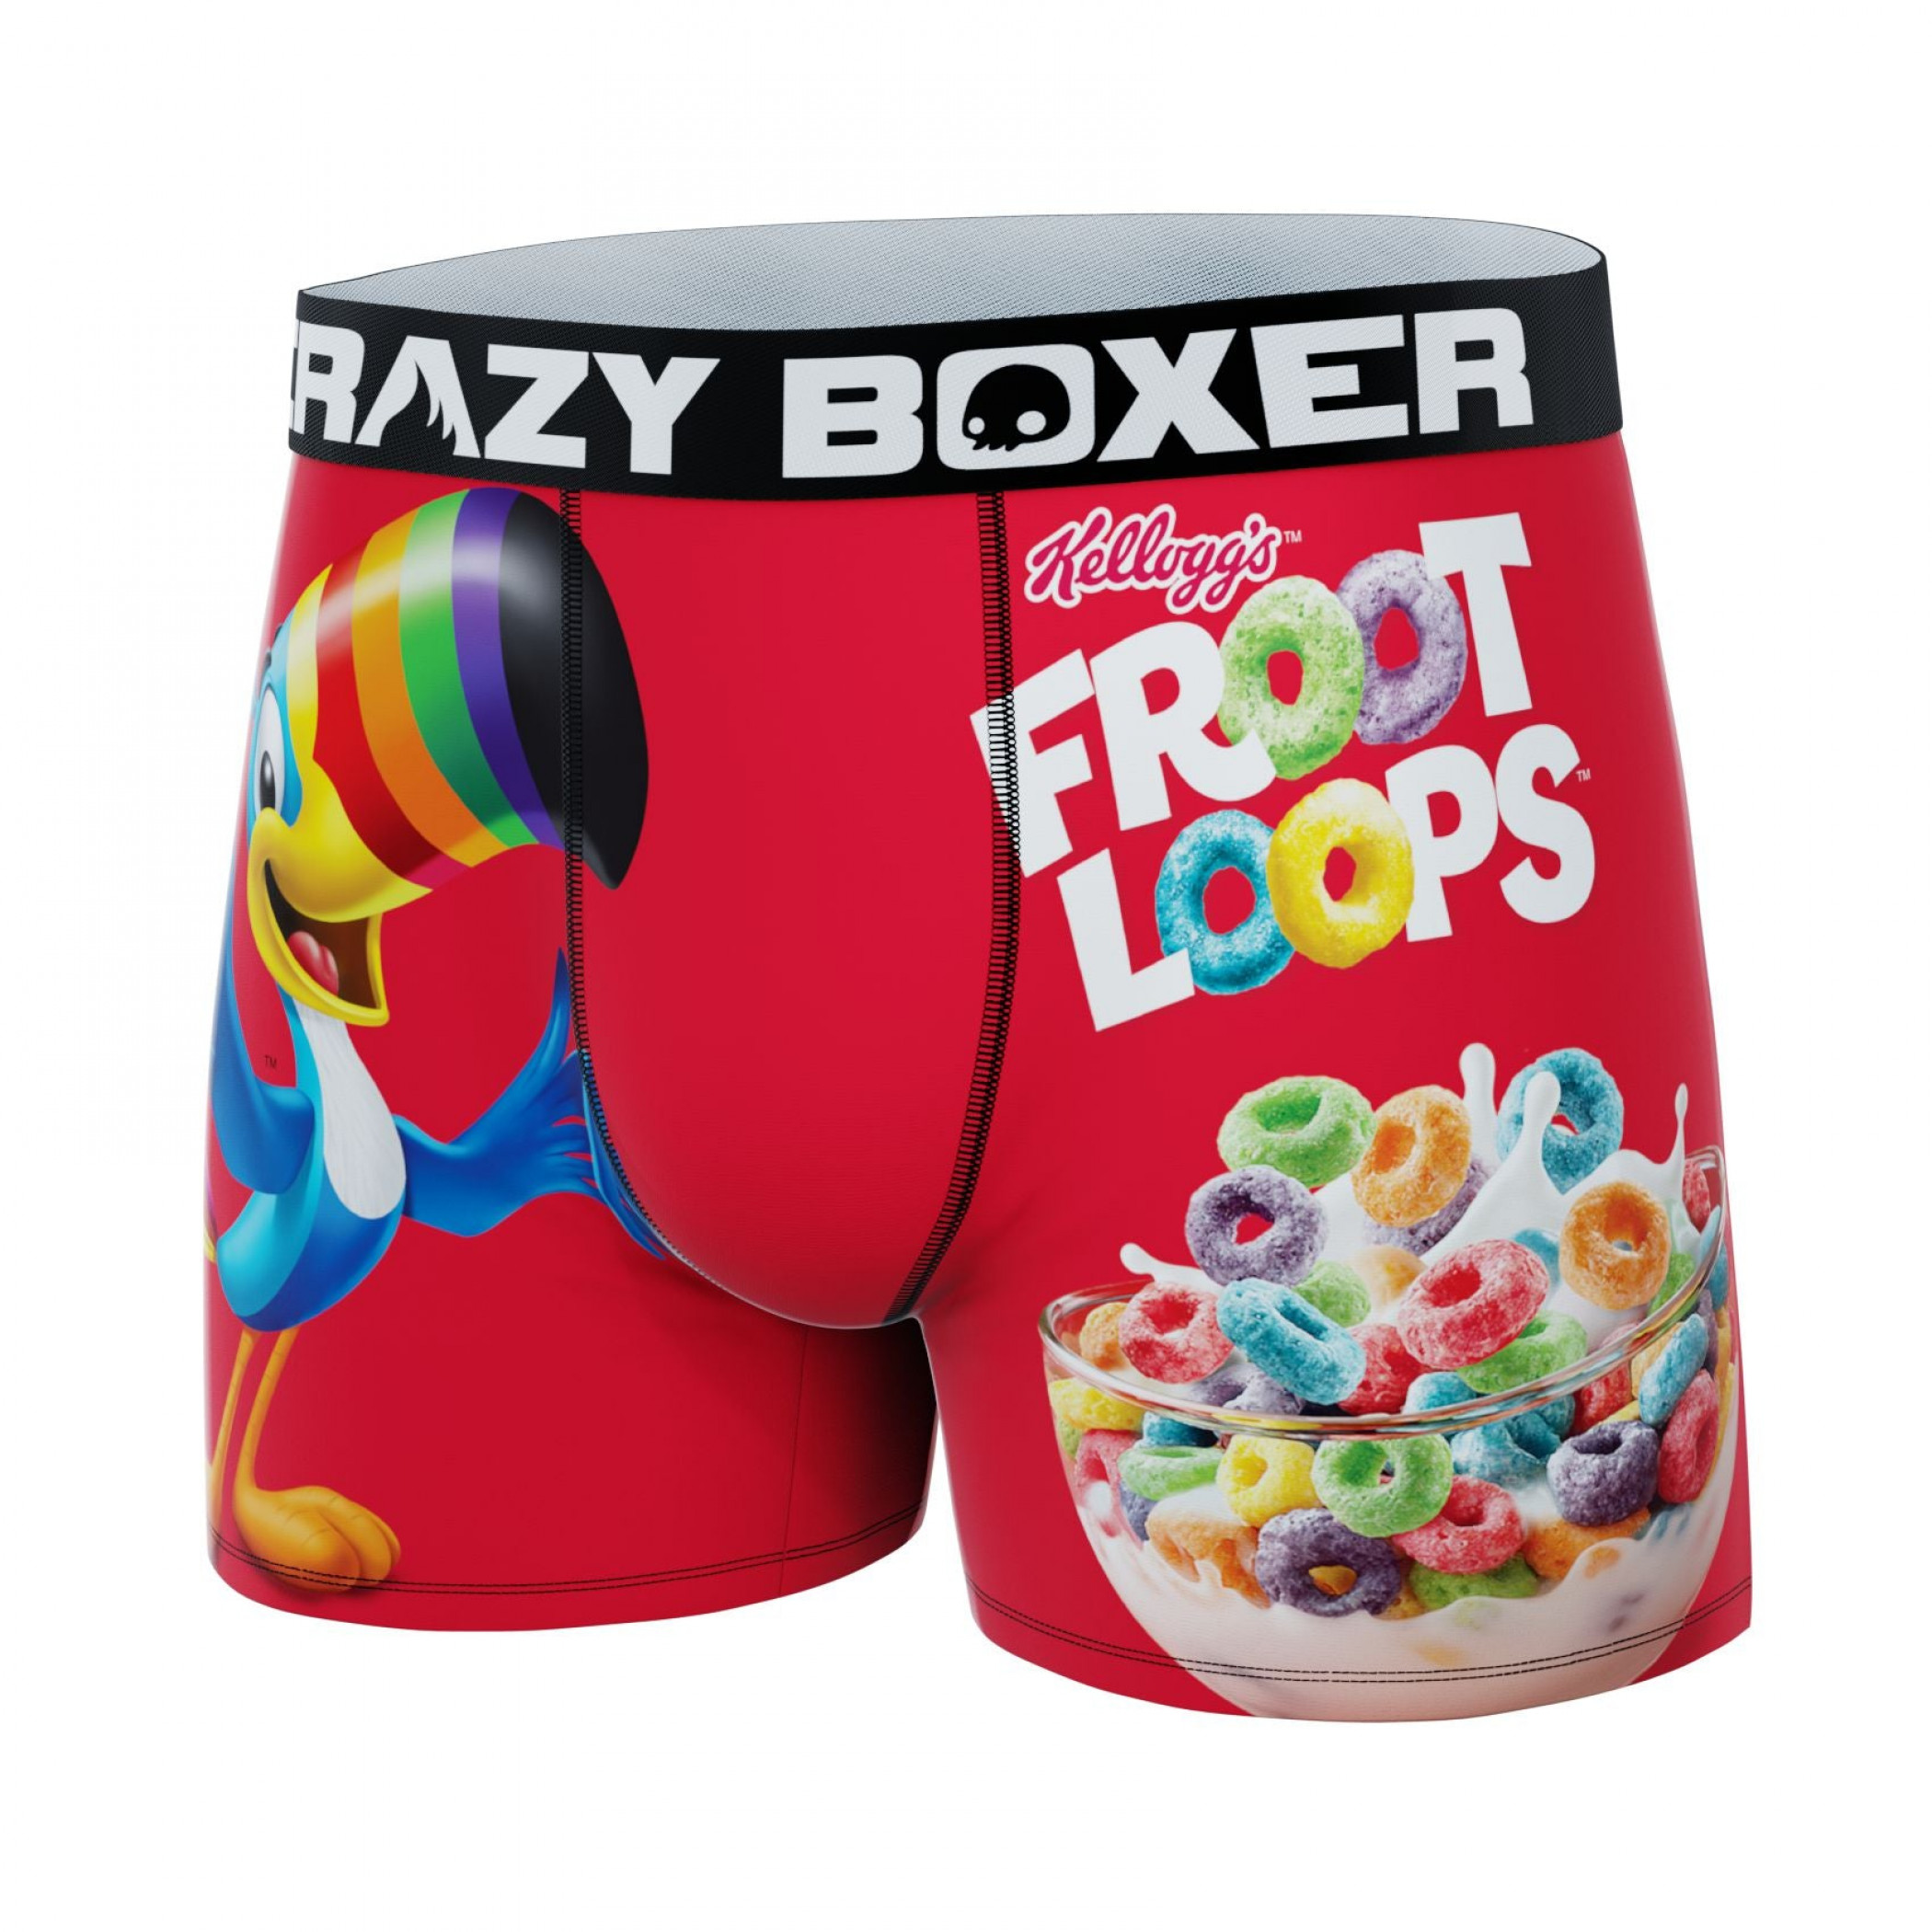 Crazy Boxer Kellogg's Froot Loops Men's Boxer Briefs Red